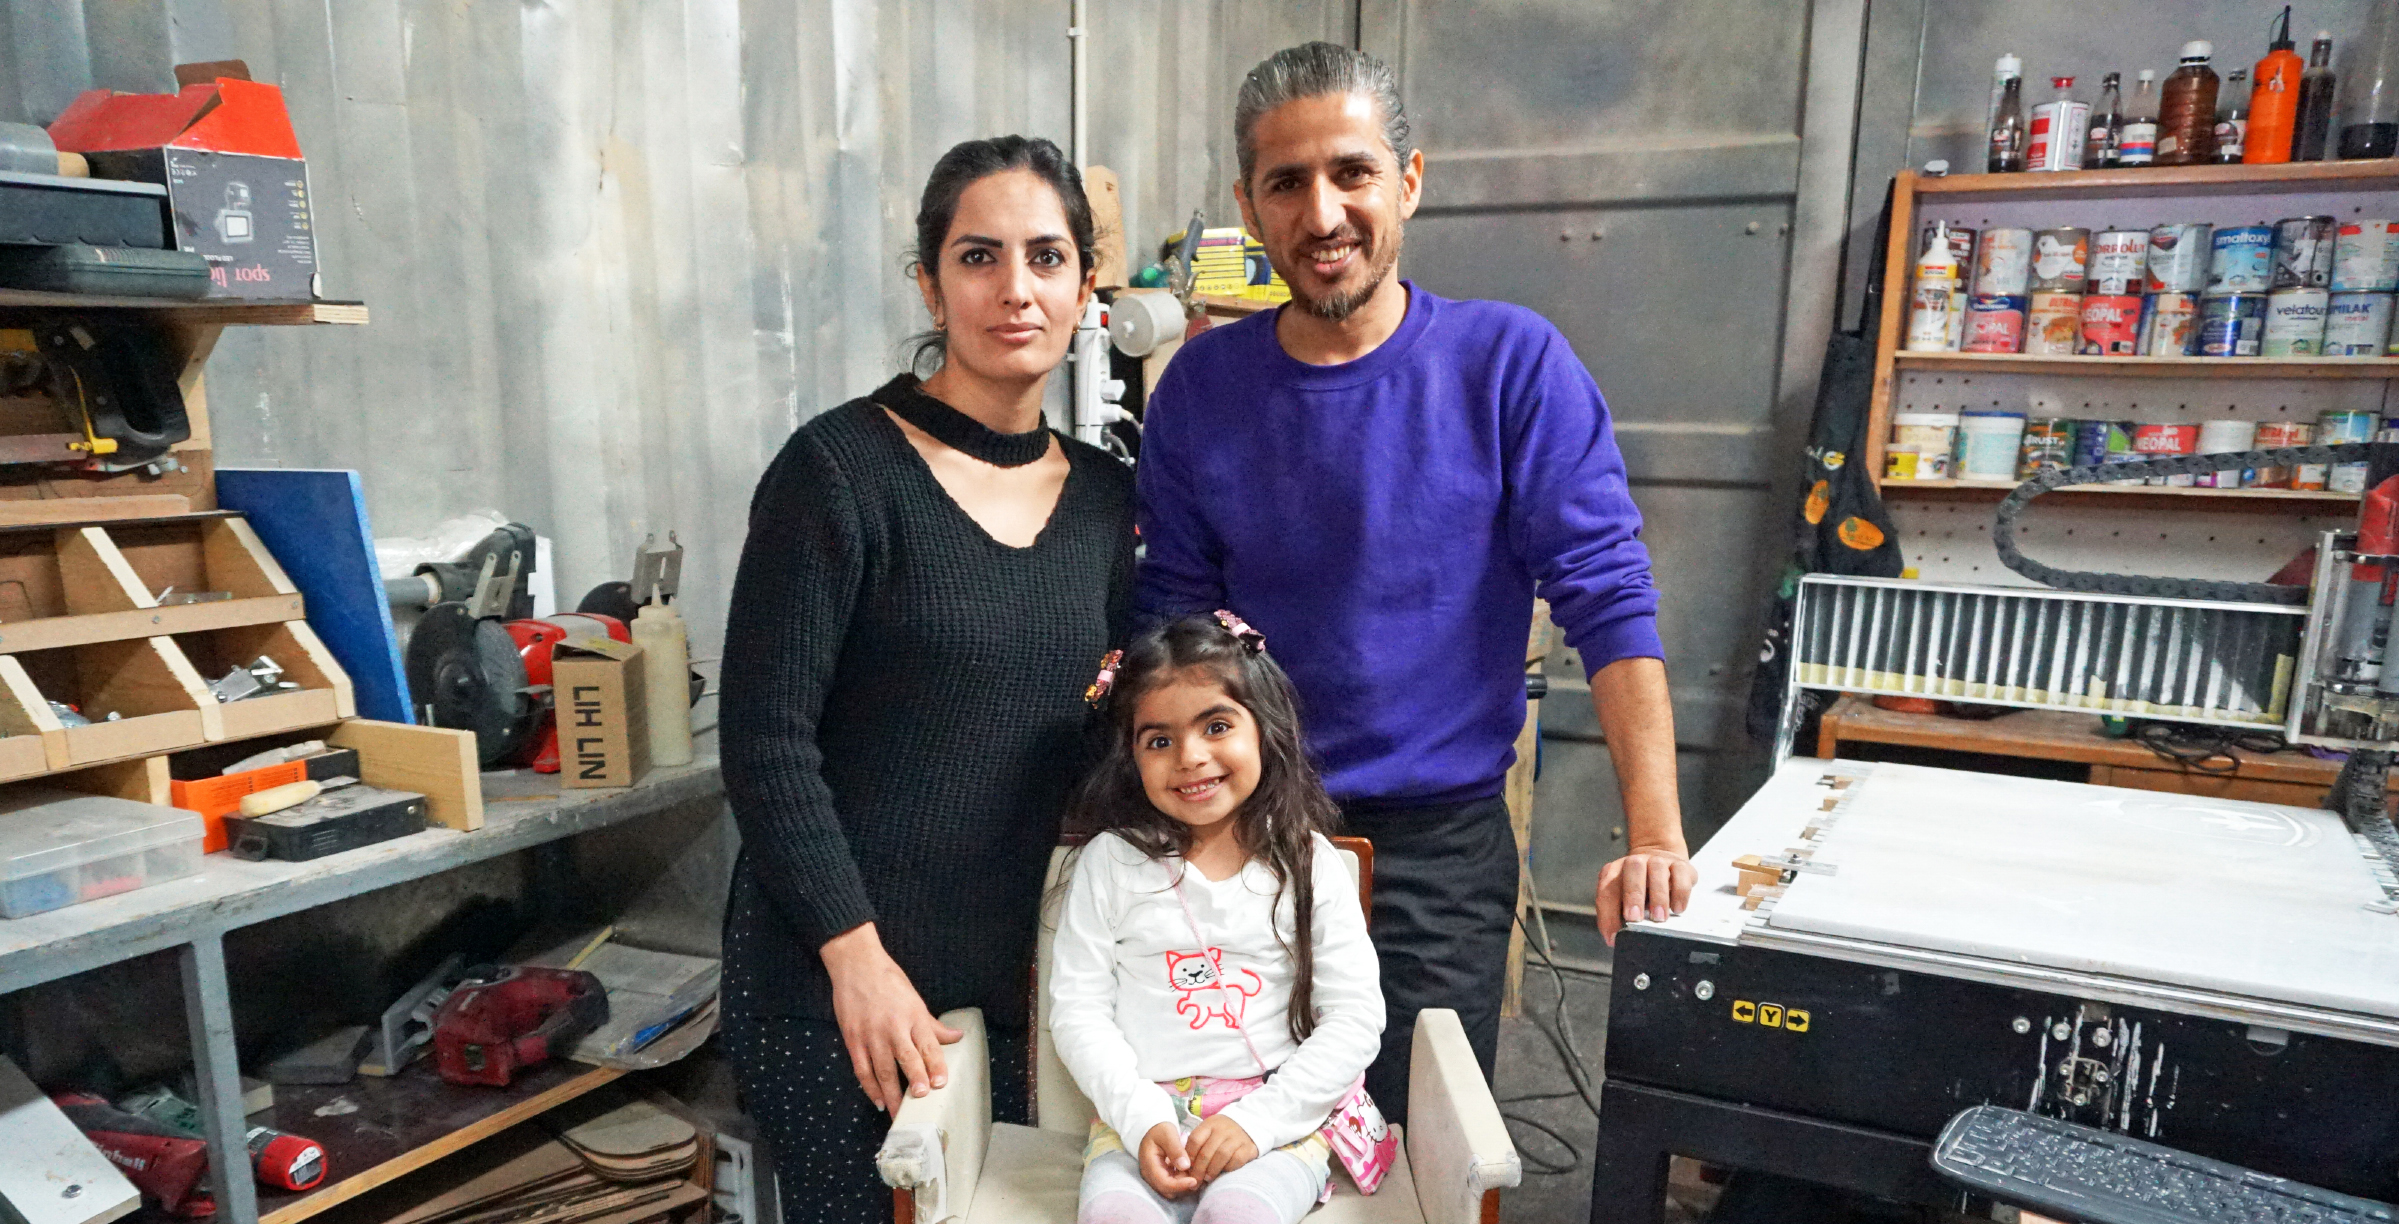  #UNHCR | Οικογένεια από το Ιράκ βρίσκει δουλειά και ανεξαρτησία στο νησί της Κω